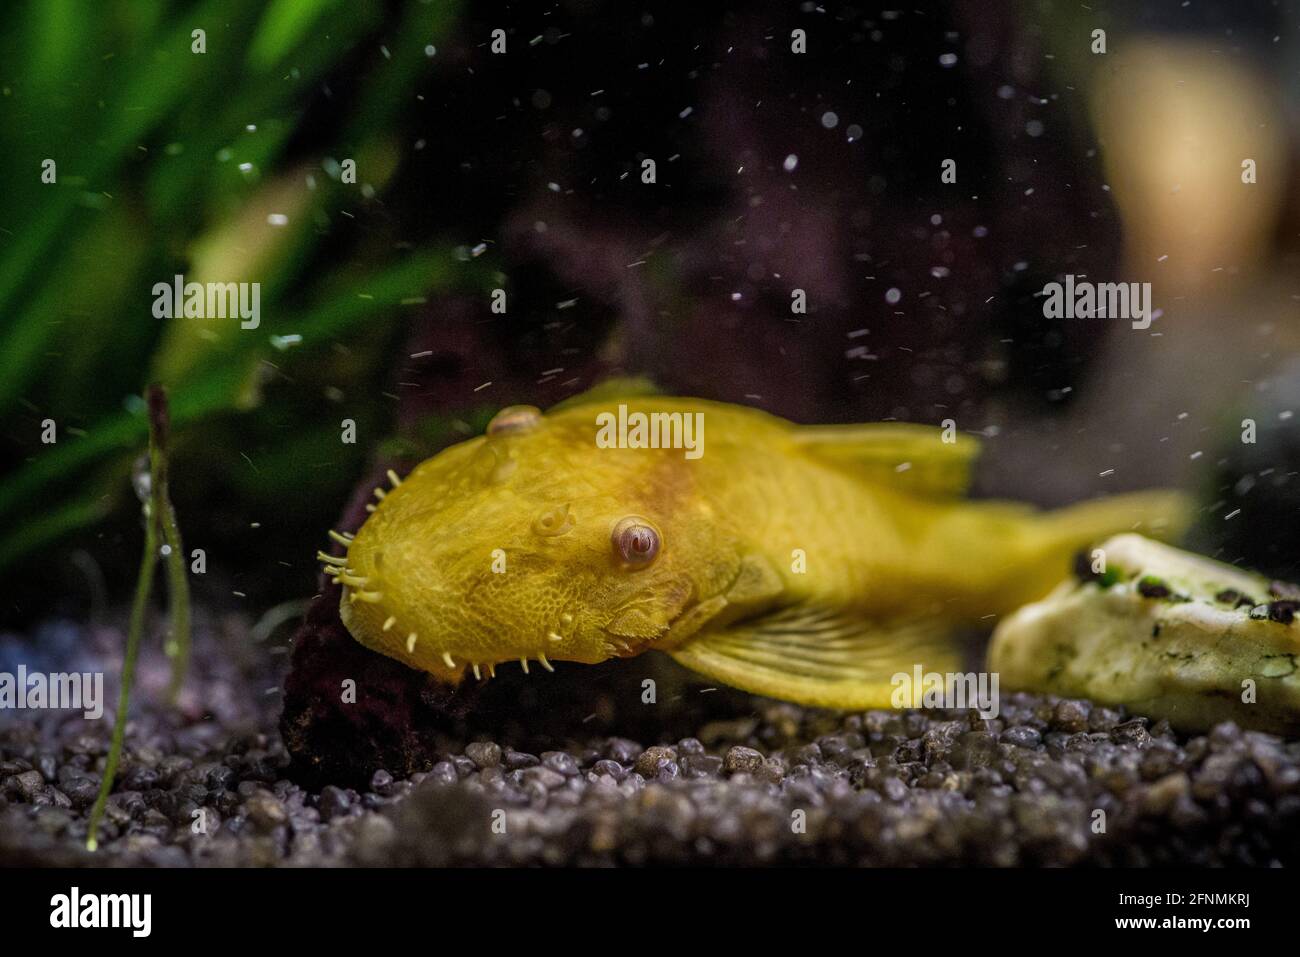 Closeup shot of an Ancistrus Gold fish swimming underwater Stock Photo